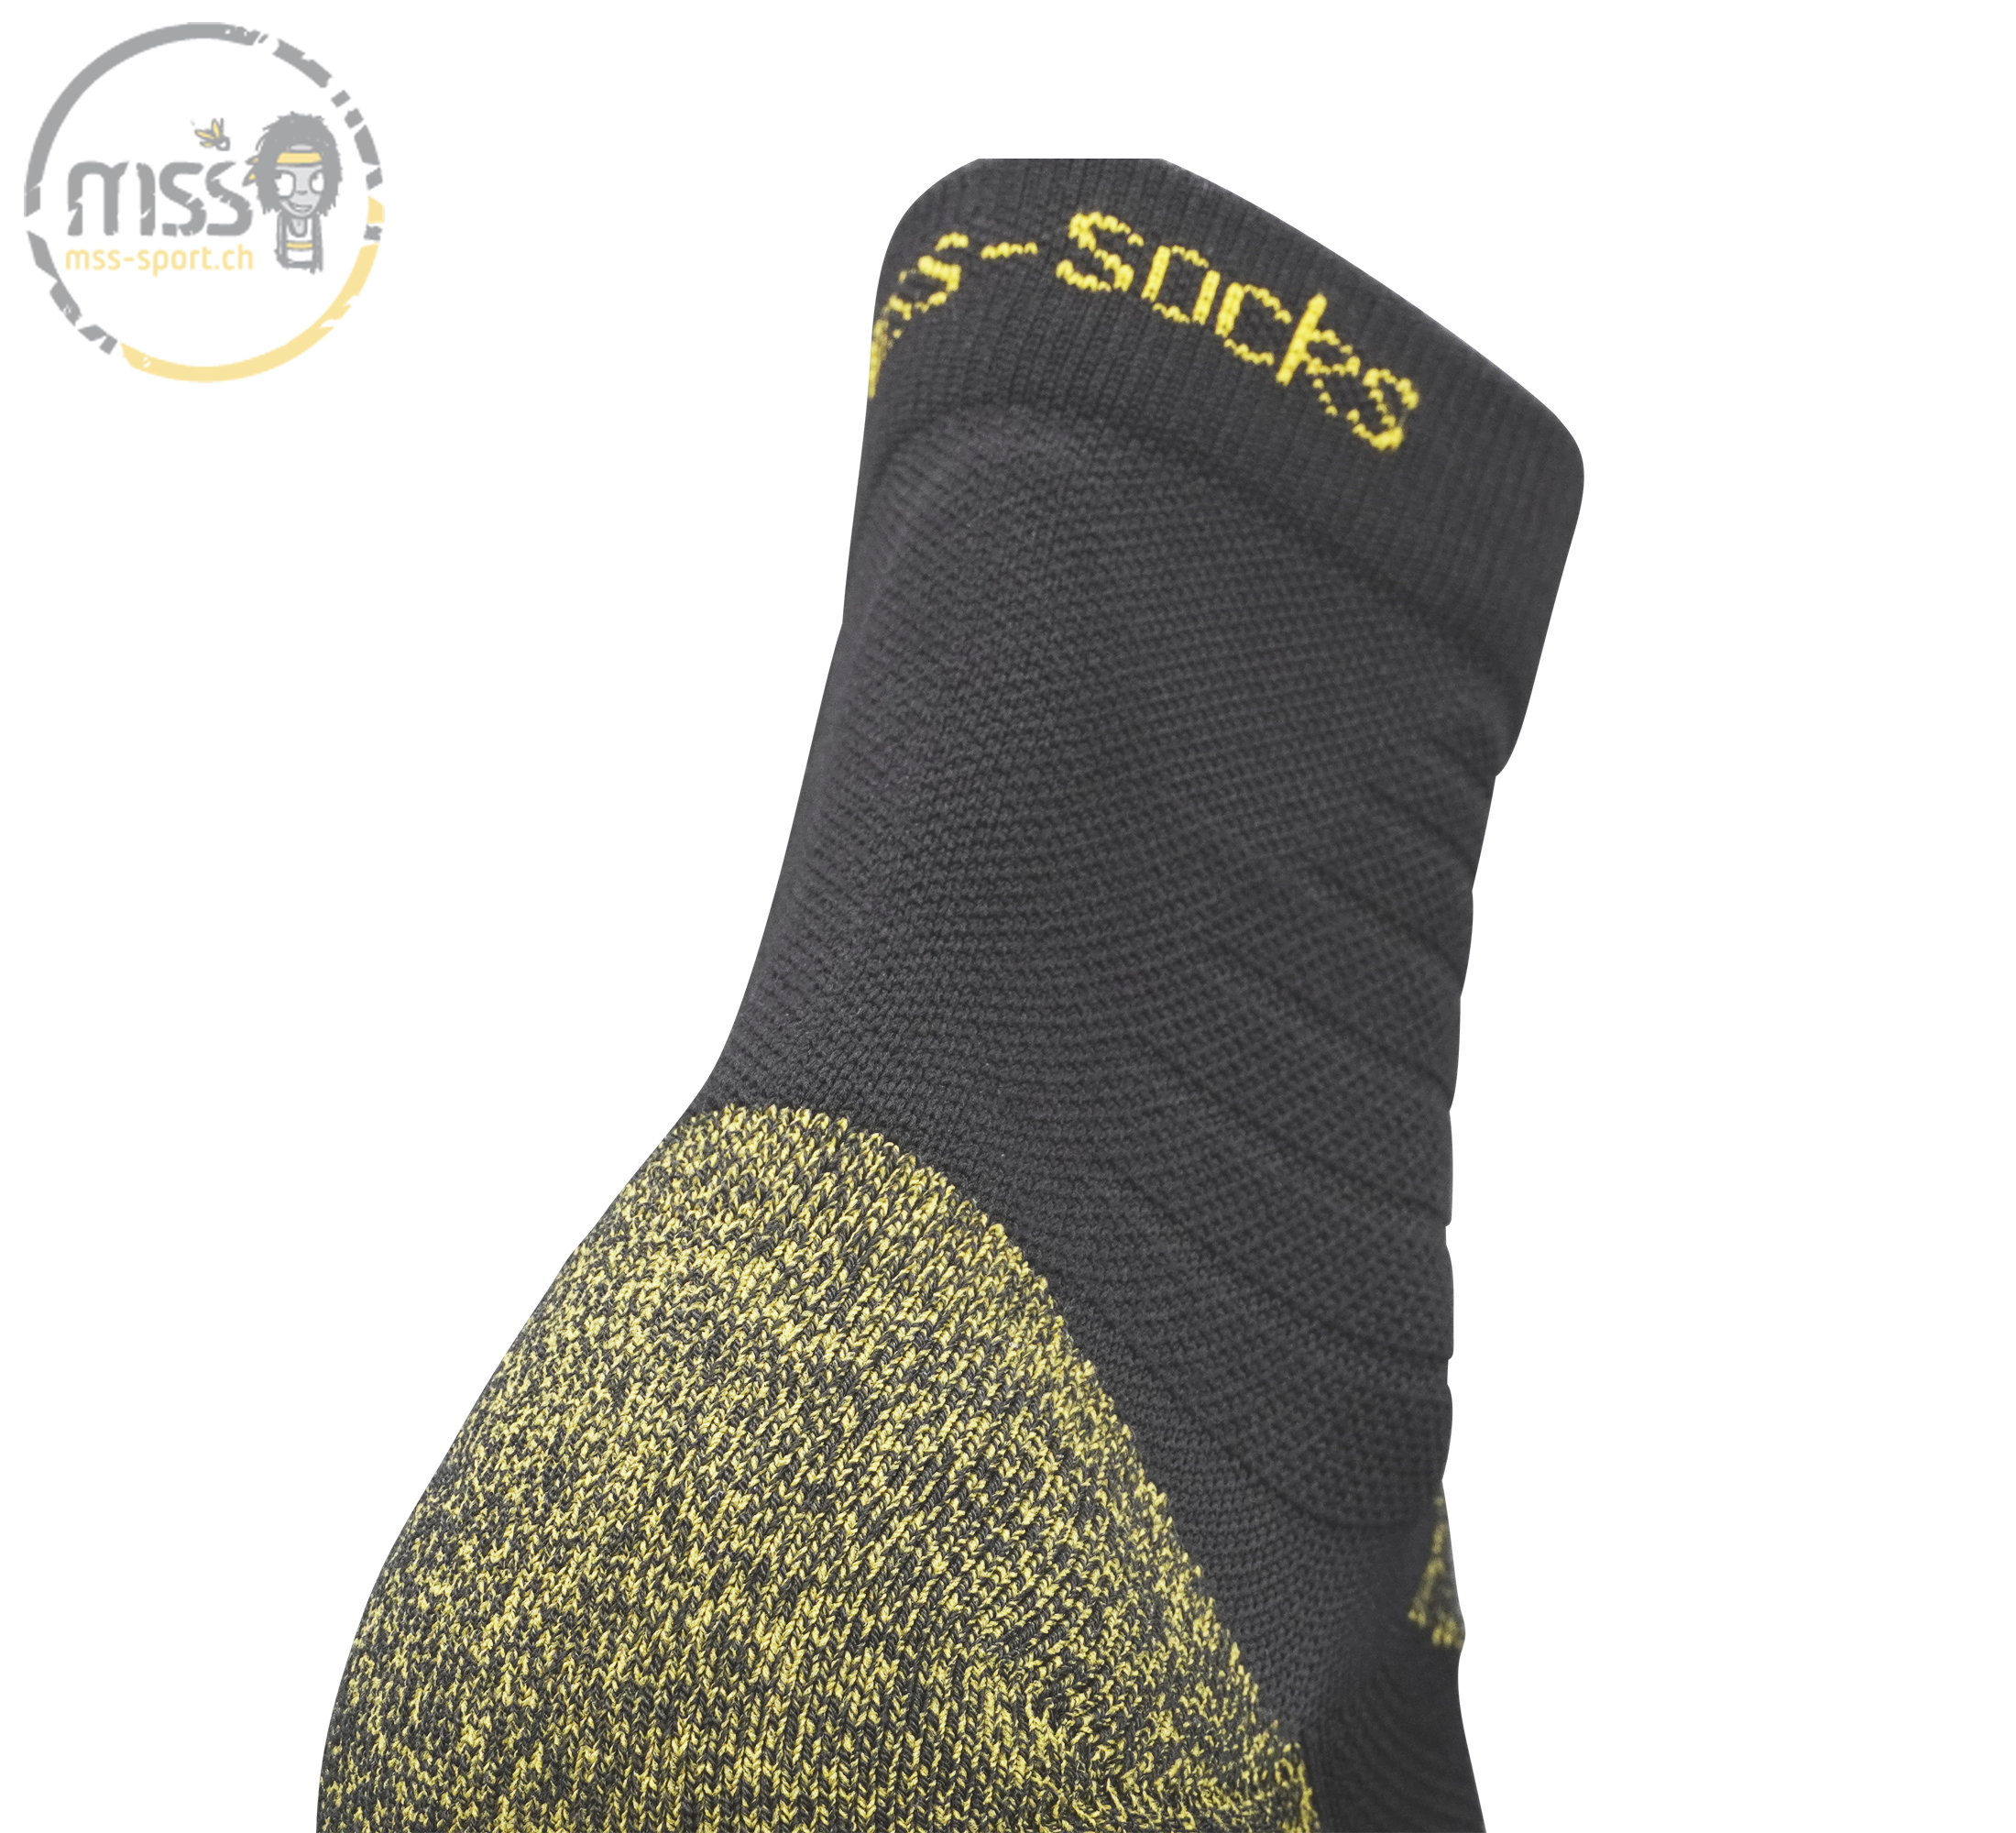 mss-socks GO 7500 mid Men black yellow